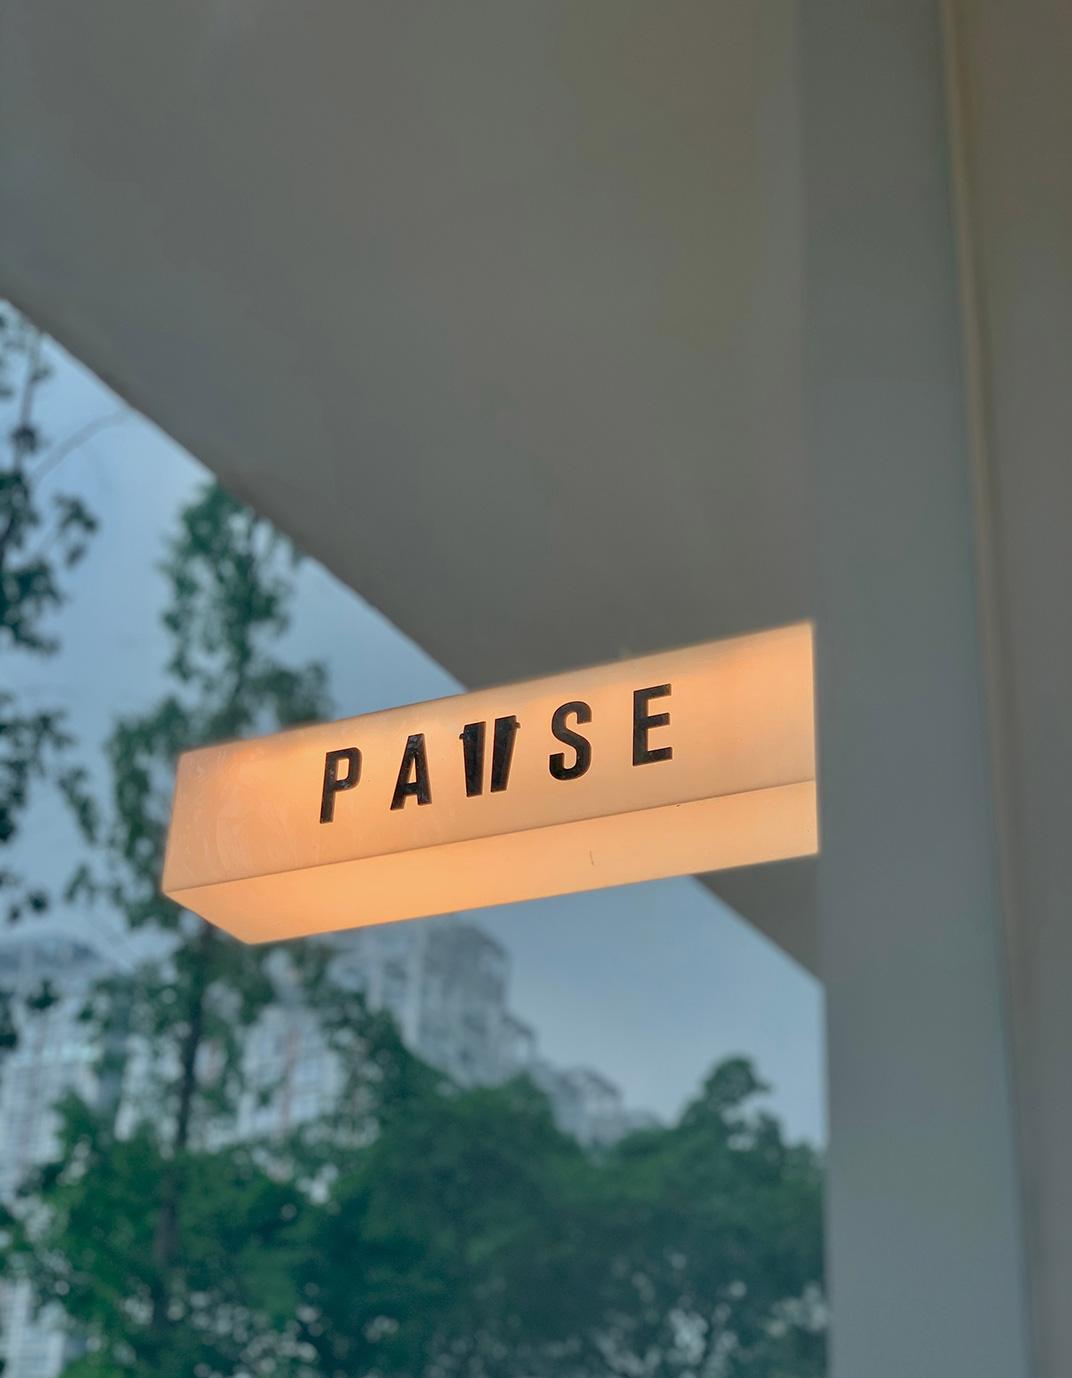 Pause Space猛追湾店 成都 咖啡店 白色空间 网红店 logo设计 vi设计 空间设计